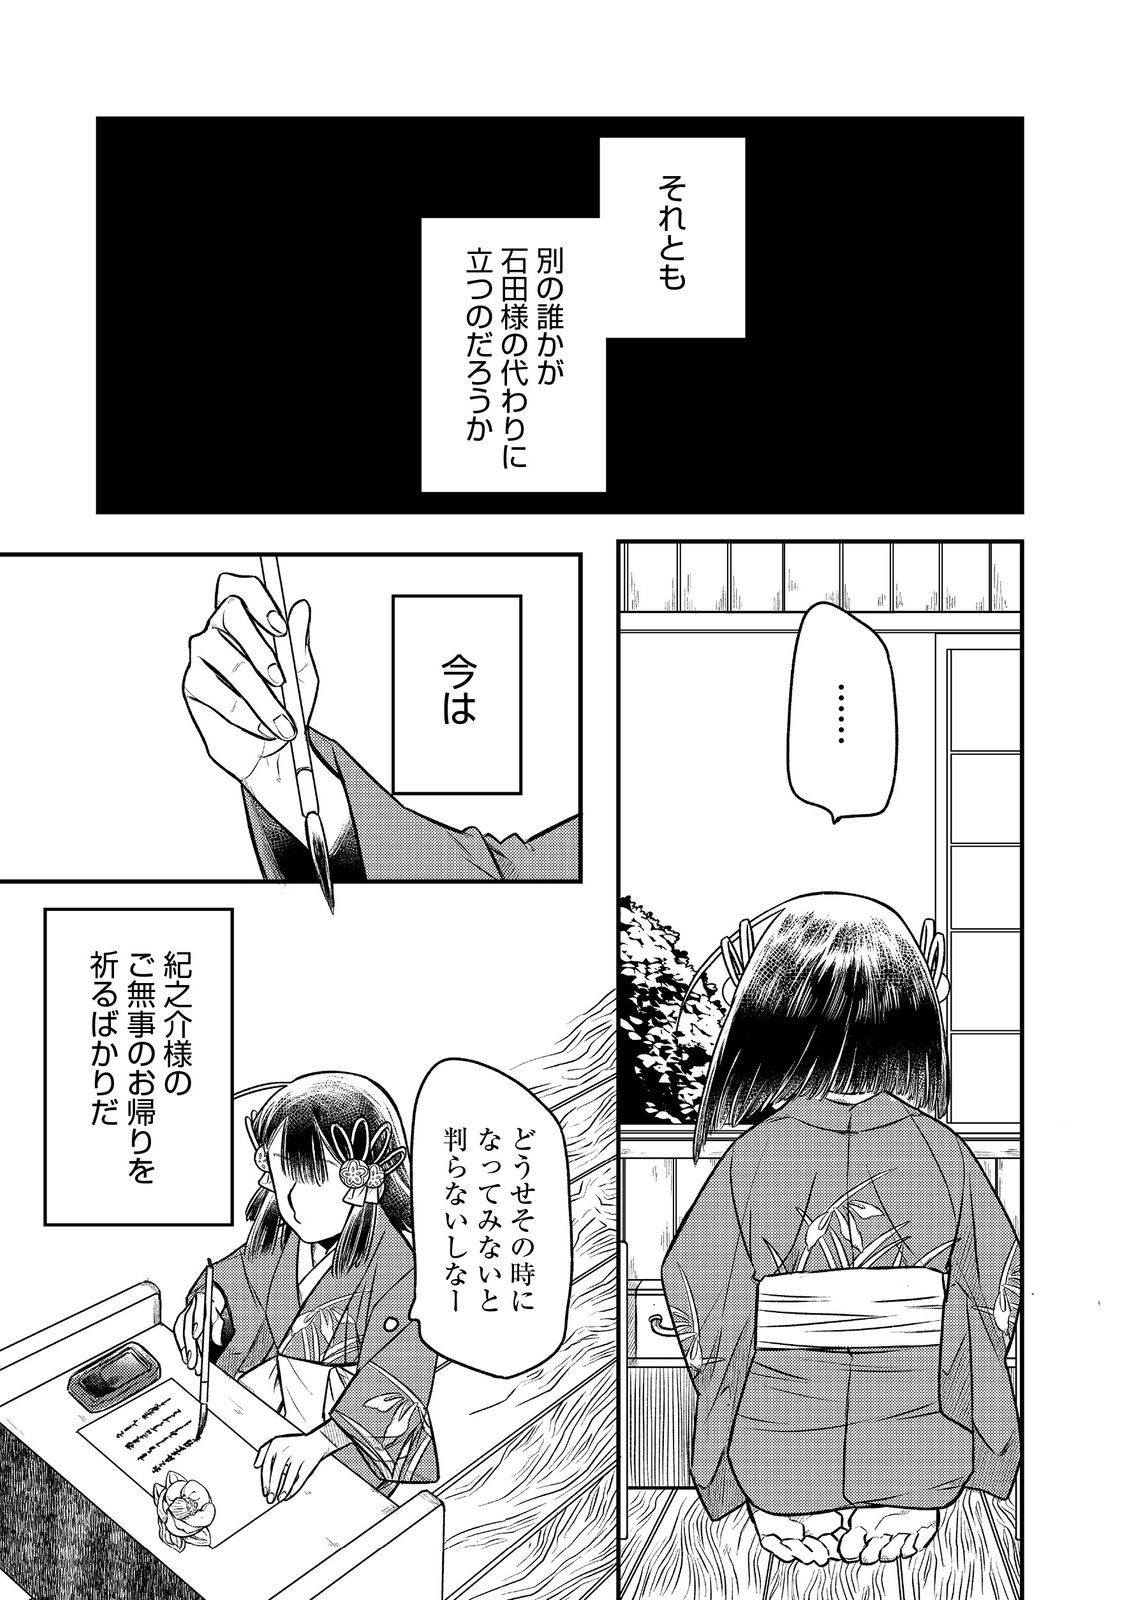 Kitanomandokoro-sama no Okeshougakari - Chapter 8.2 - Page 3